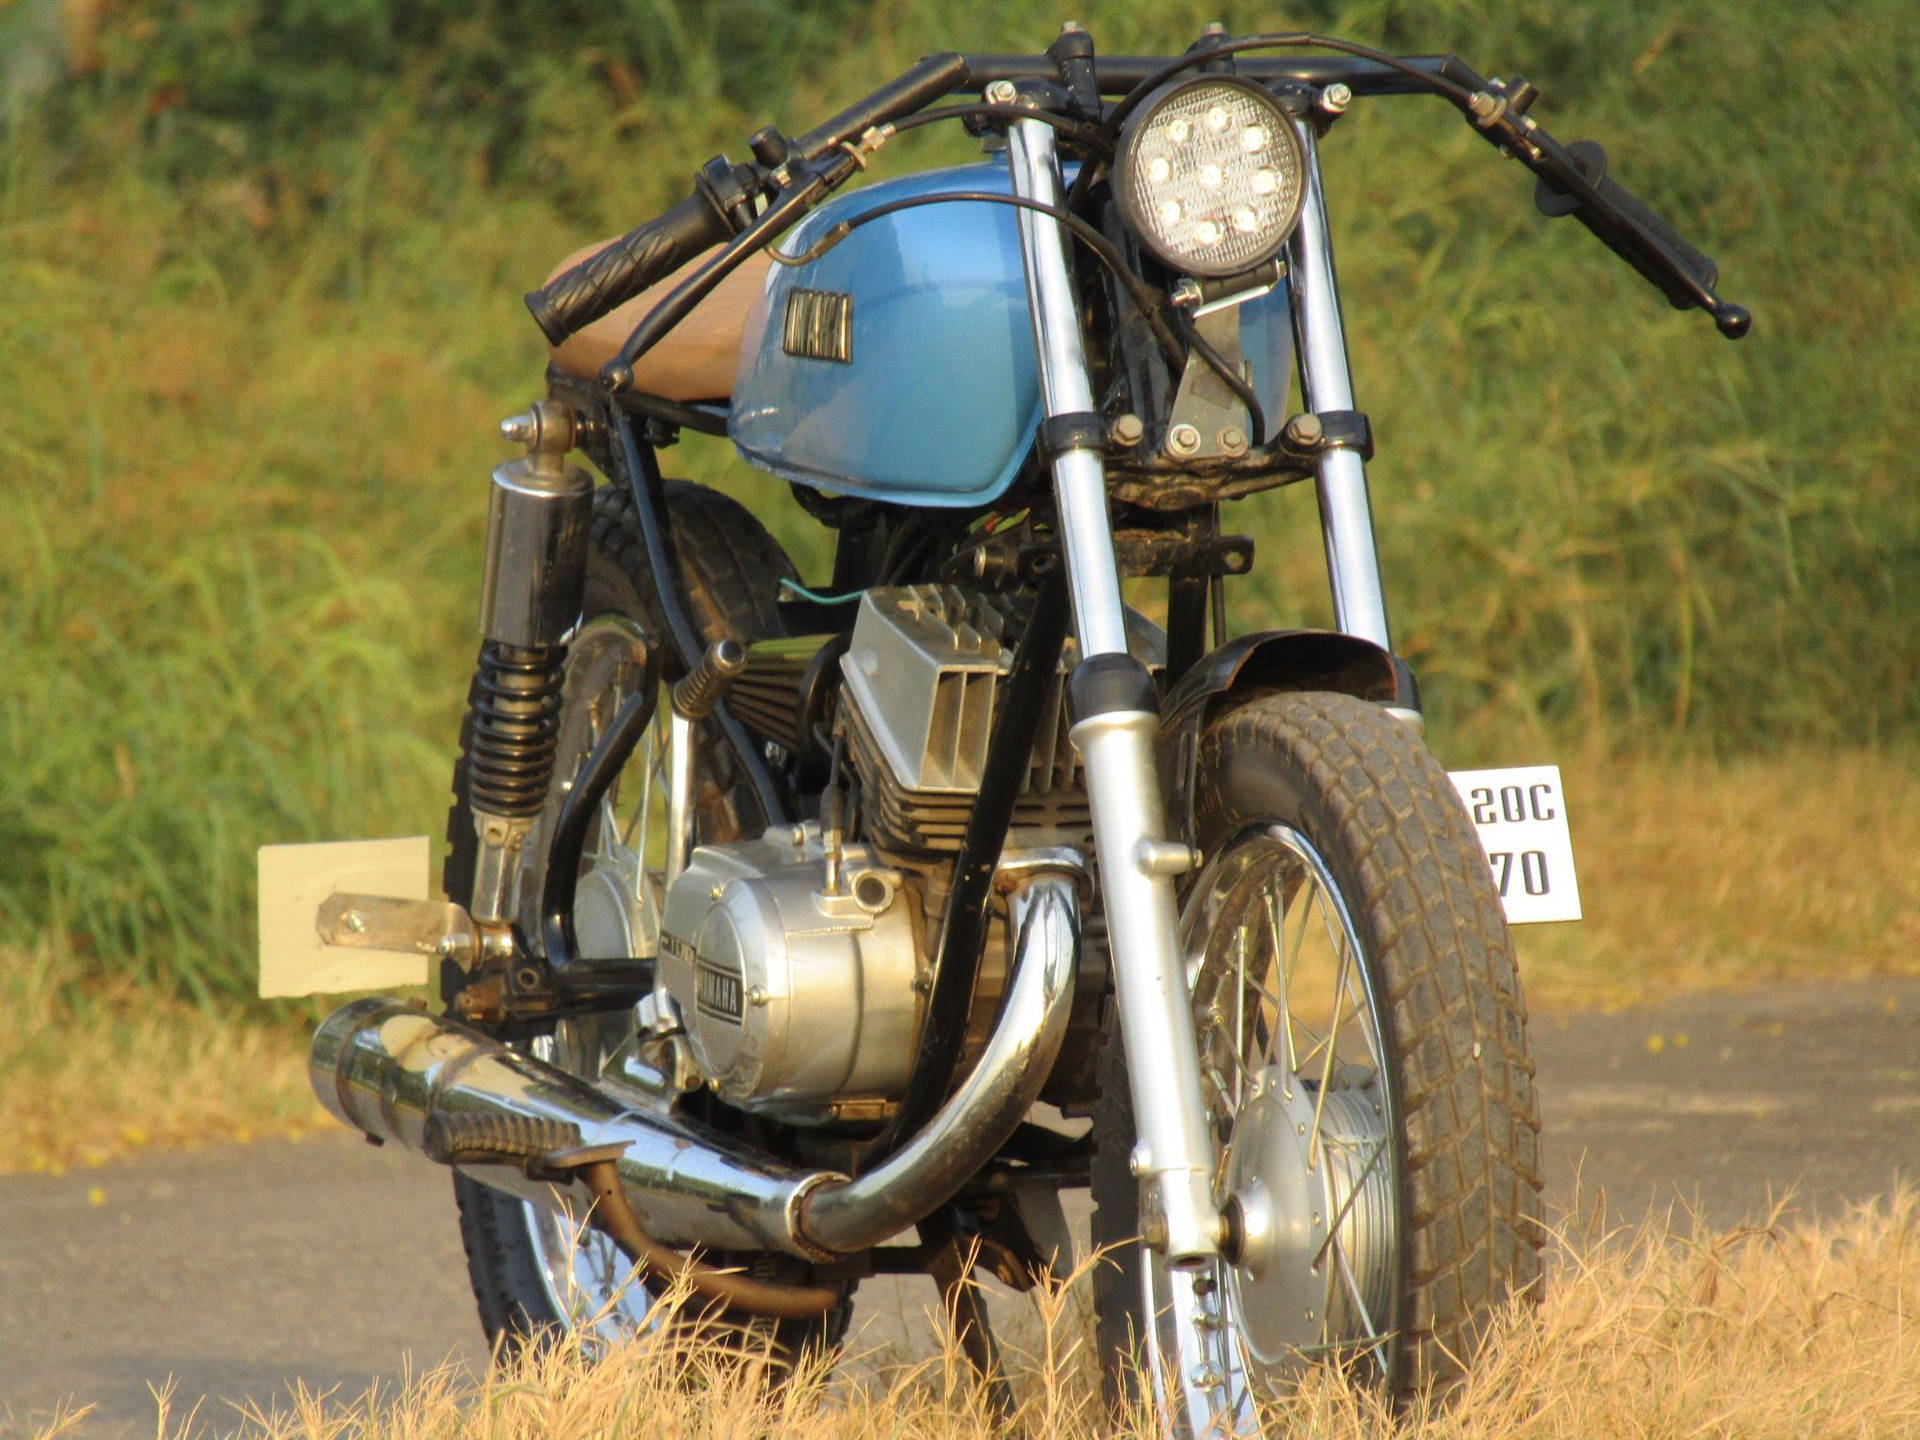 Yamaha Rx100 Motorcycle Modified Wallpaper